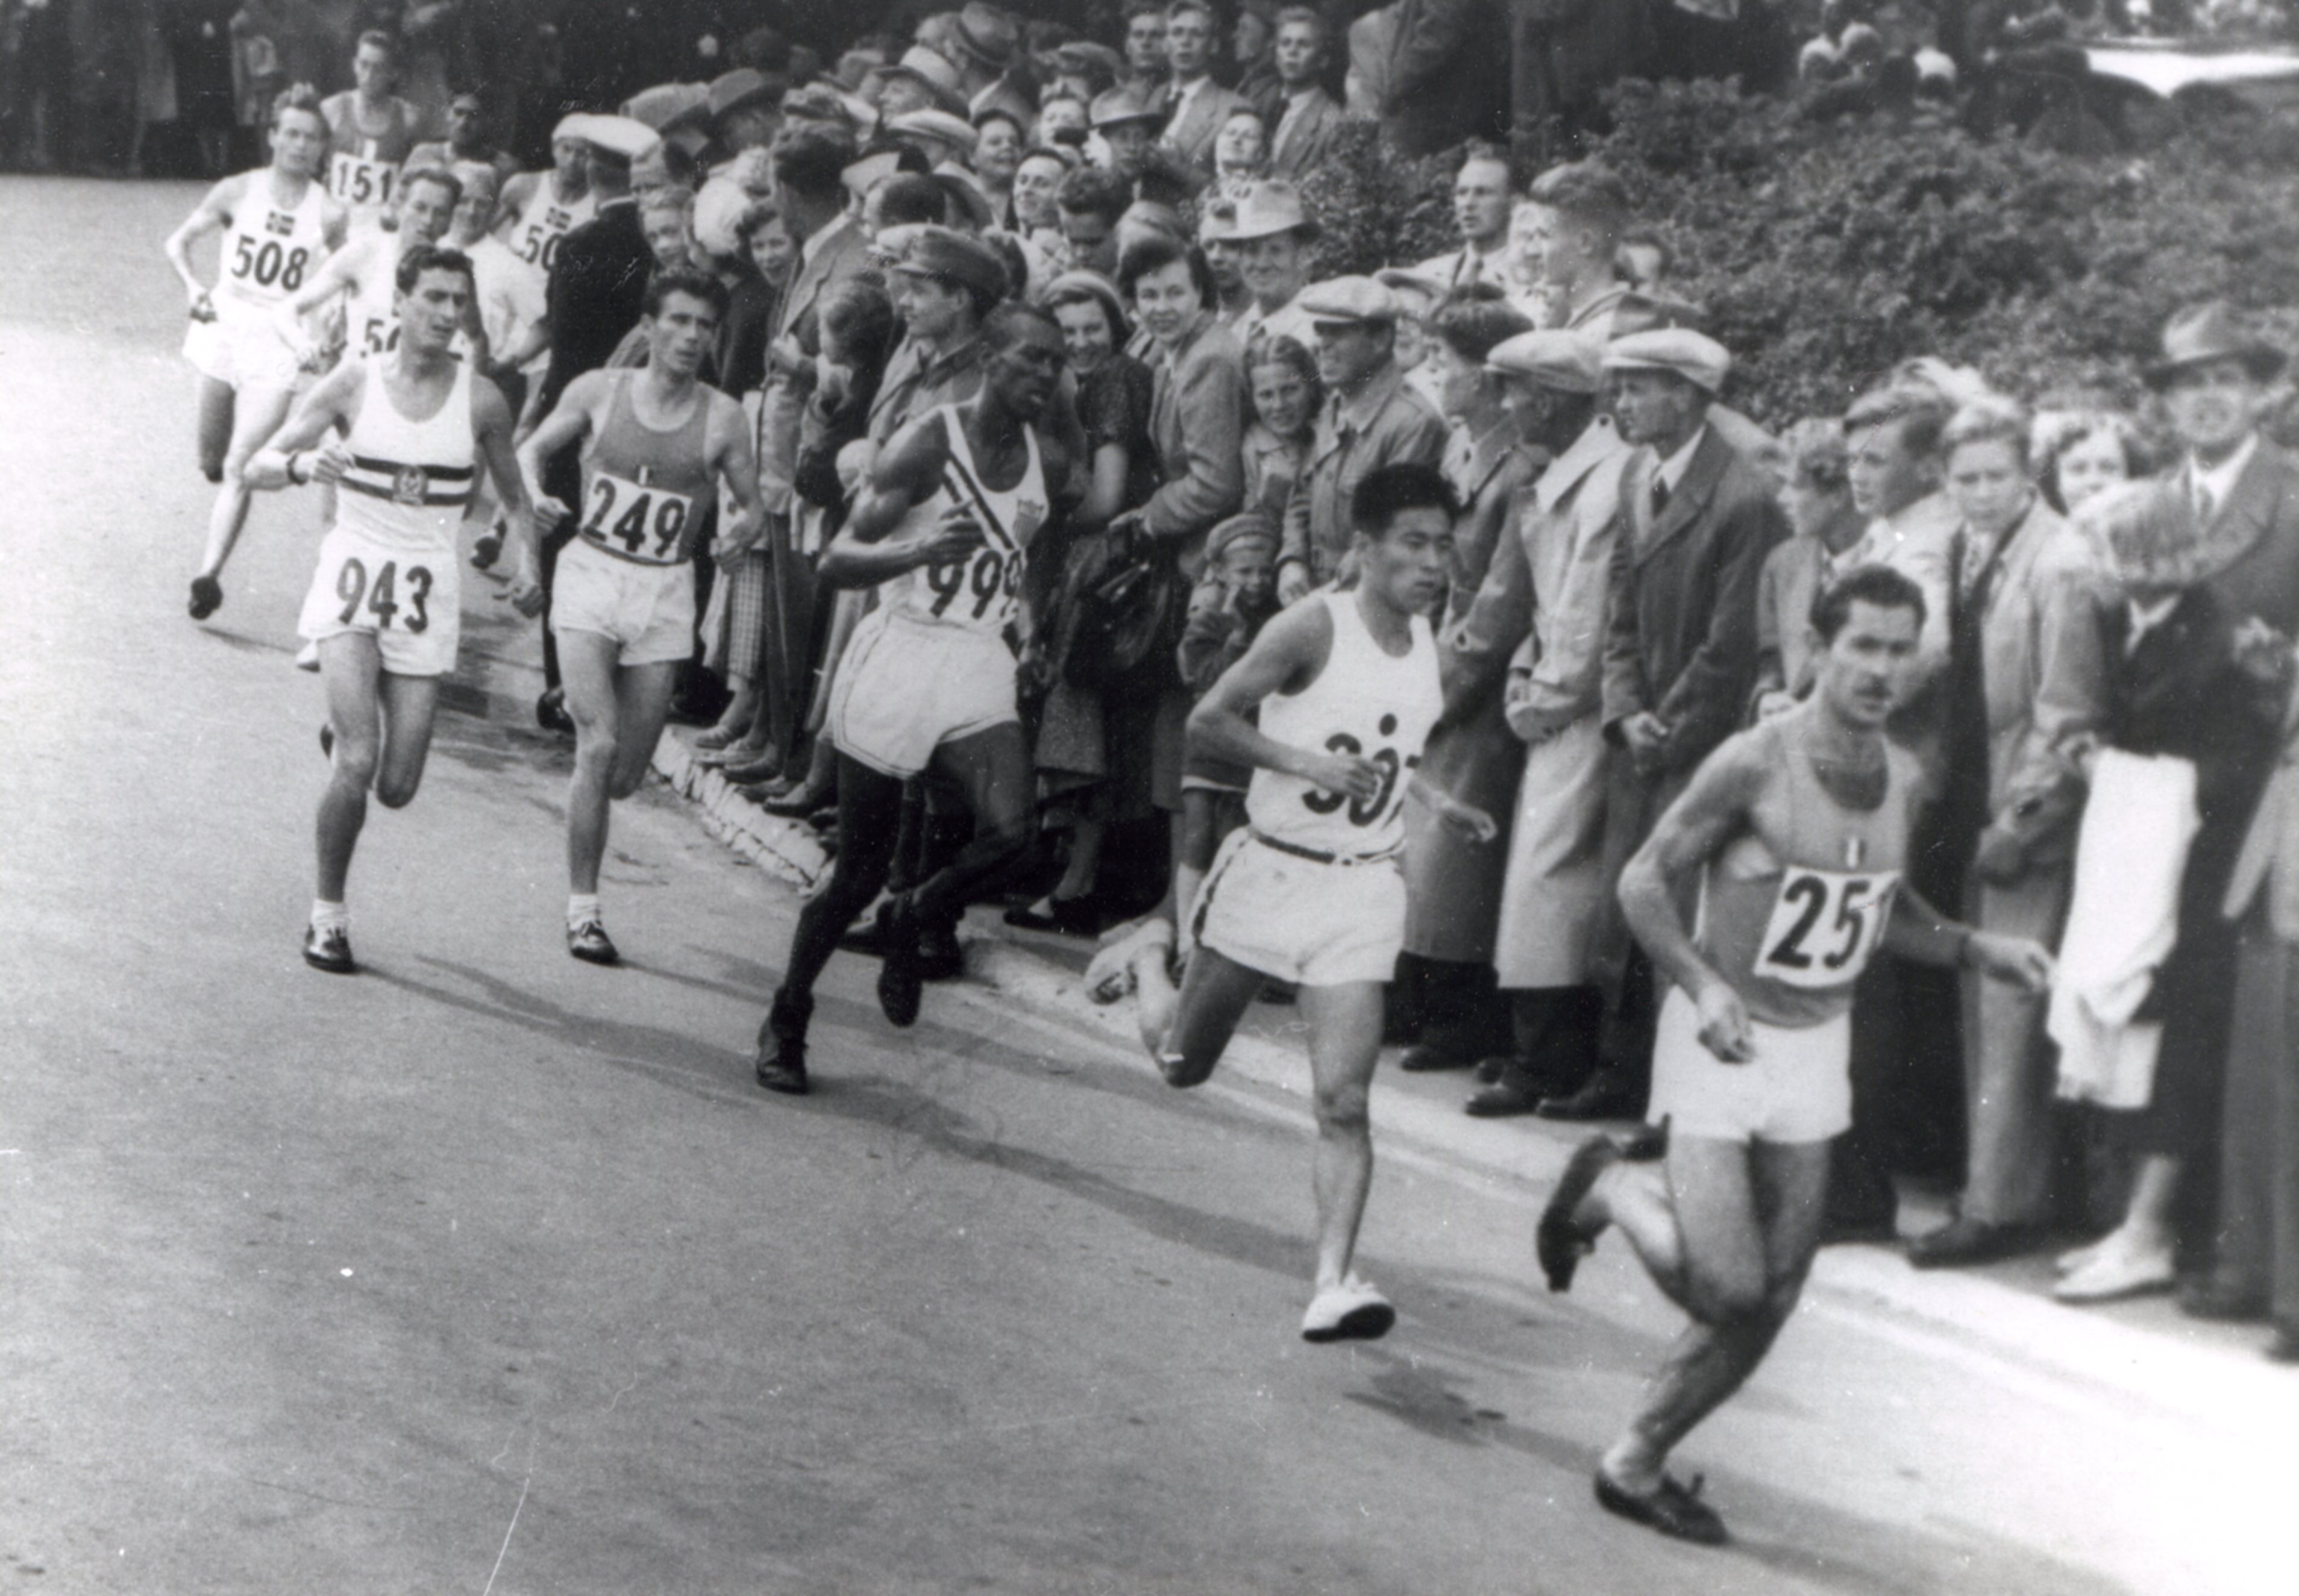 Ted Corbitt 1952 Olympic Marathon